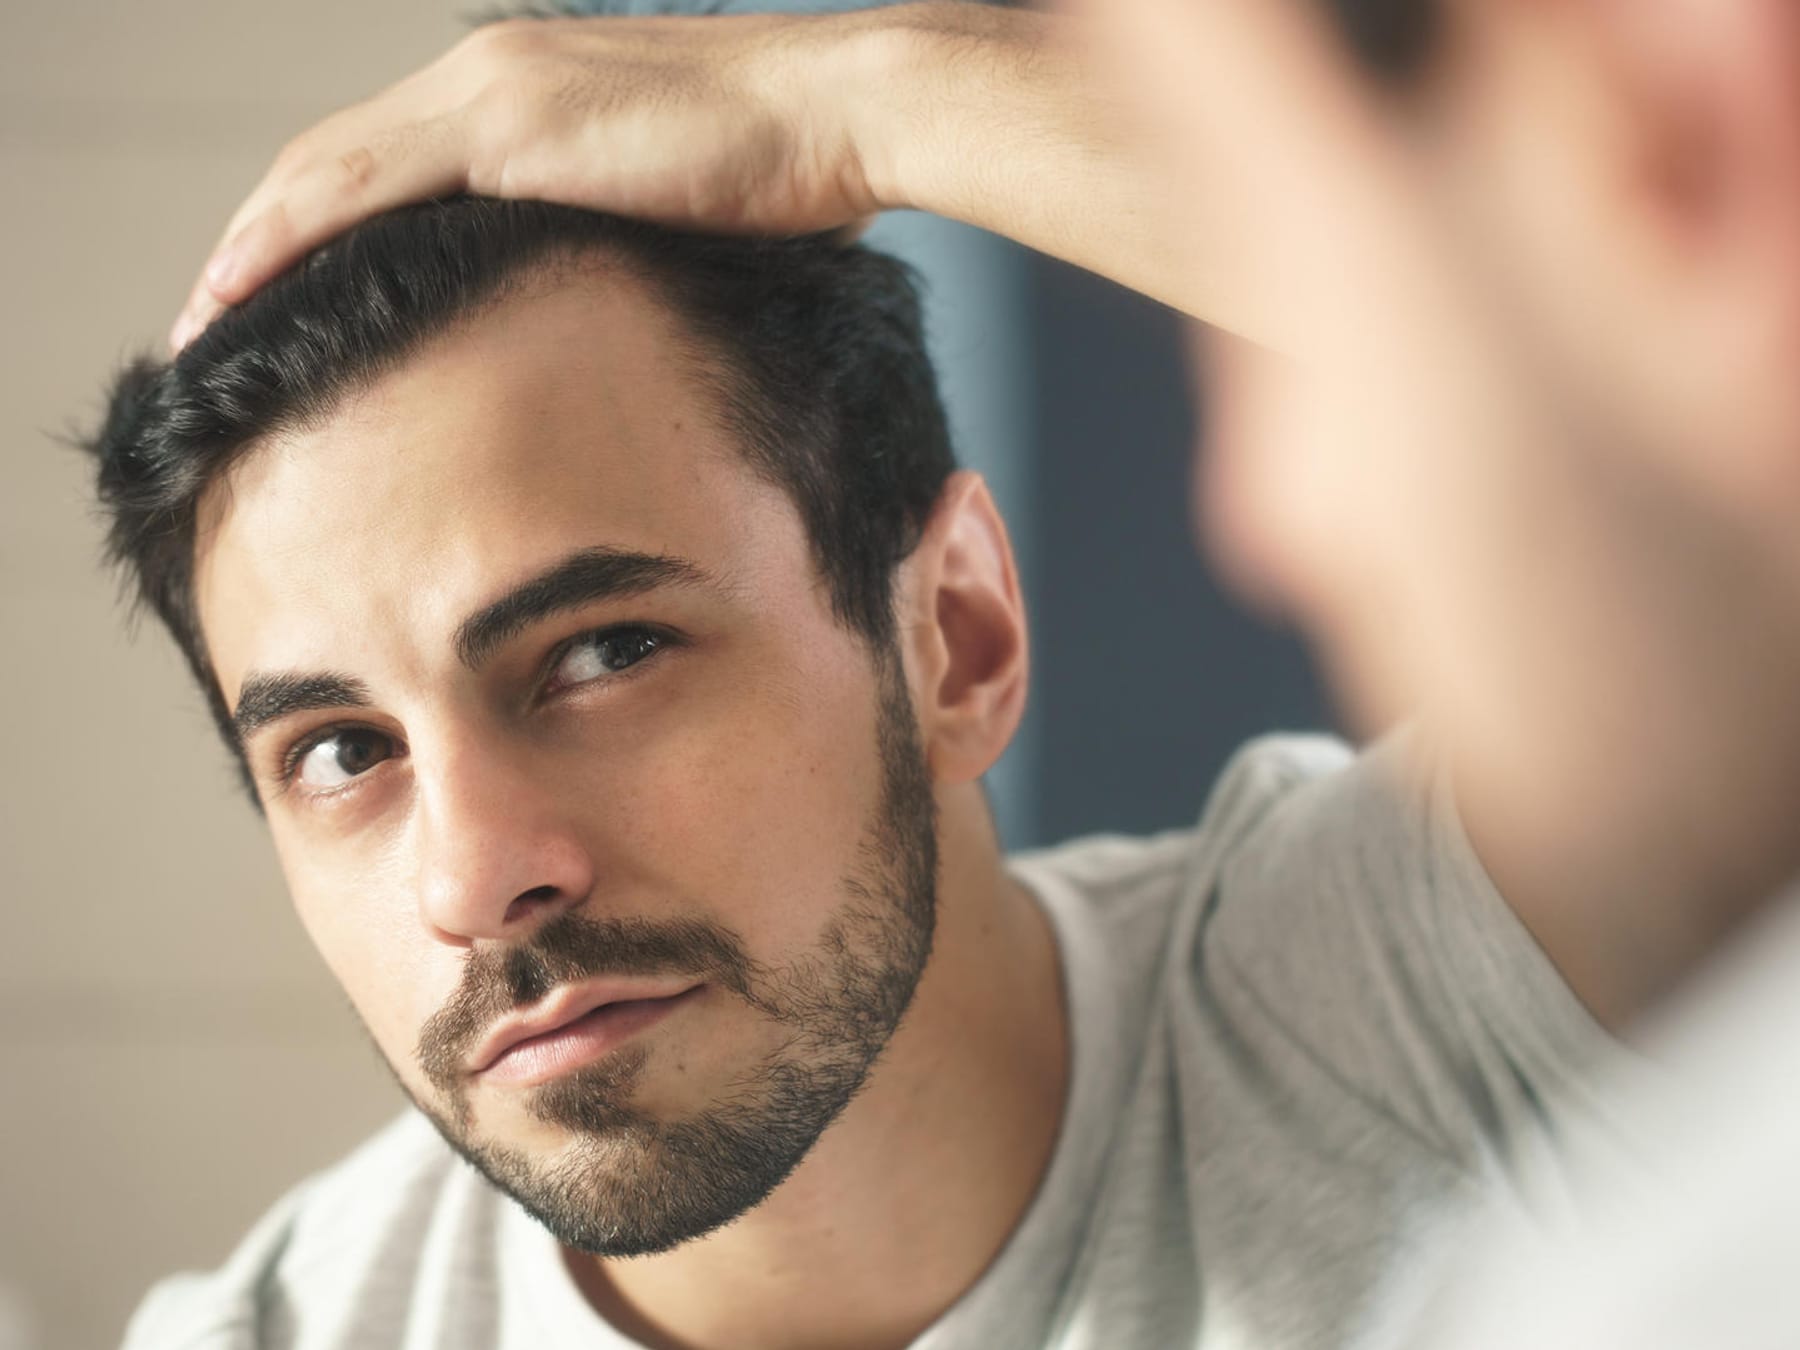 Haarausfall bei Männern stoppen: Welche Mittel helfen? Ursachen